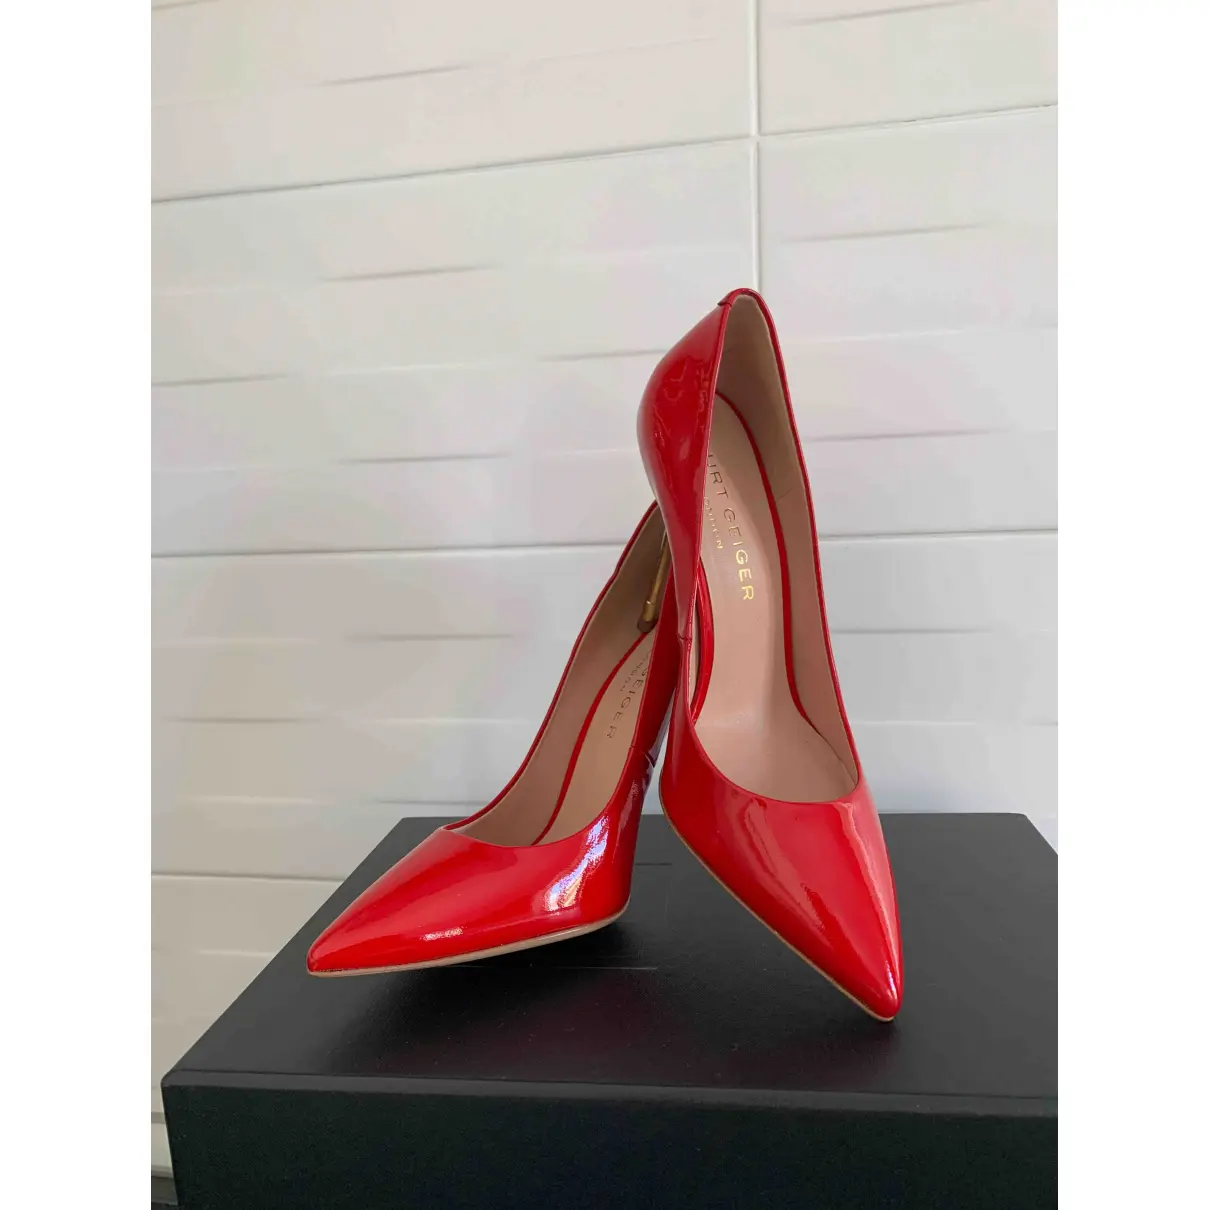 Buy Kurt Geiger Patent leather heels online